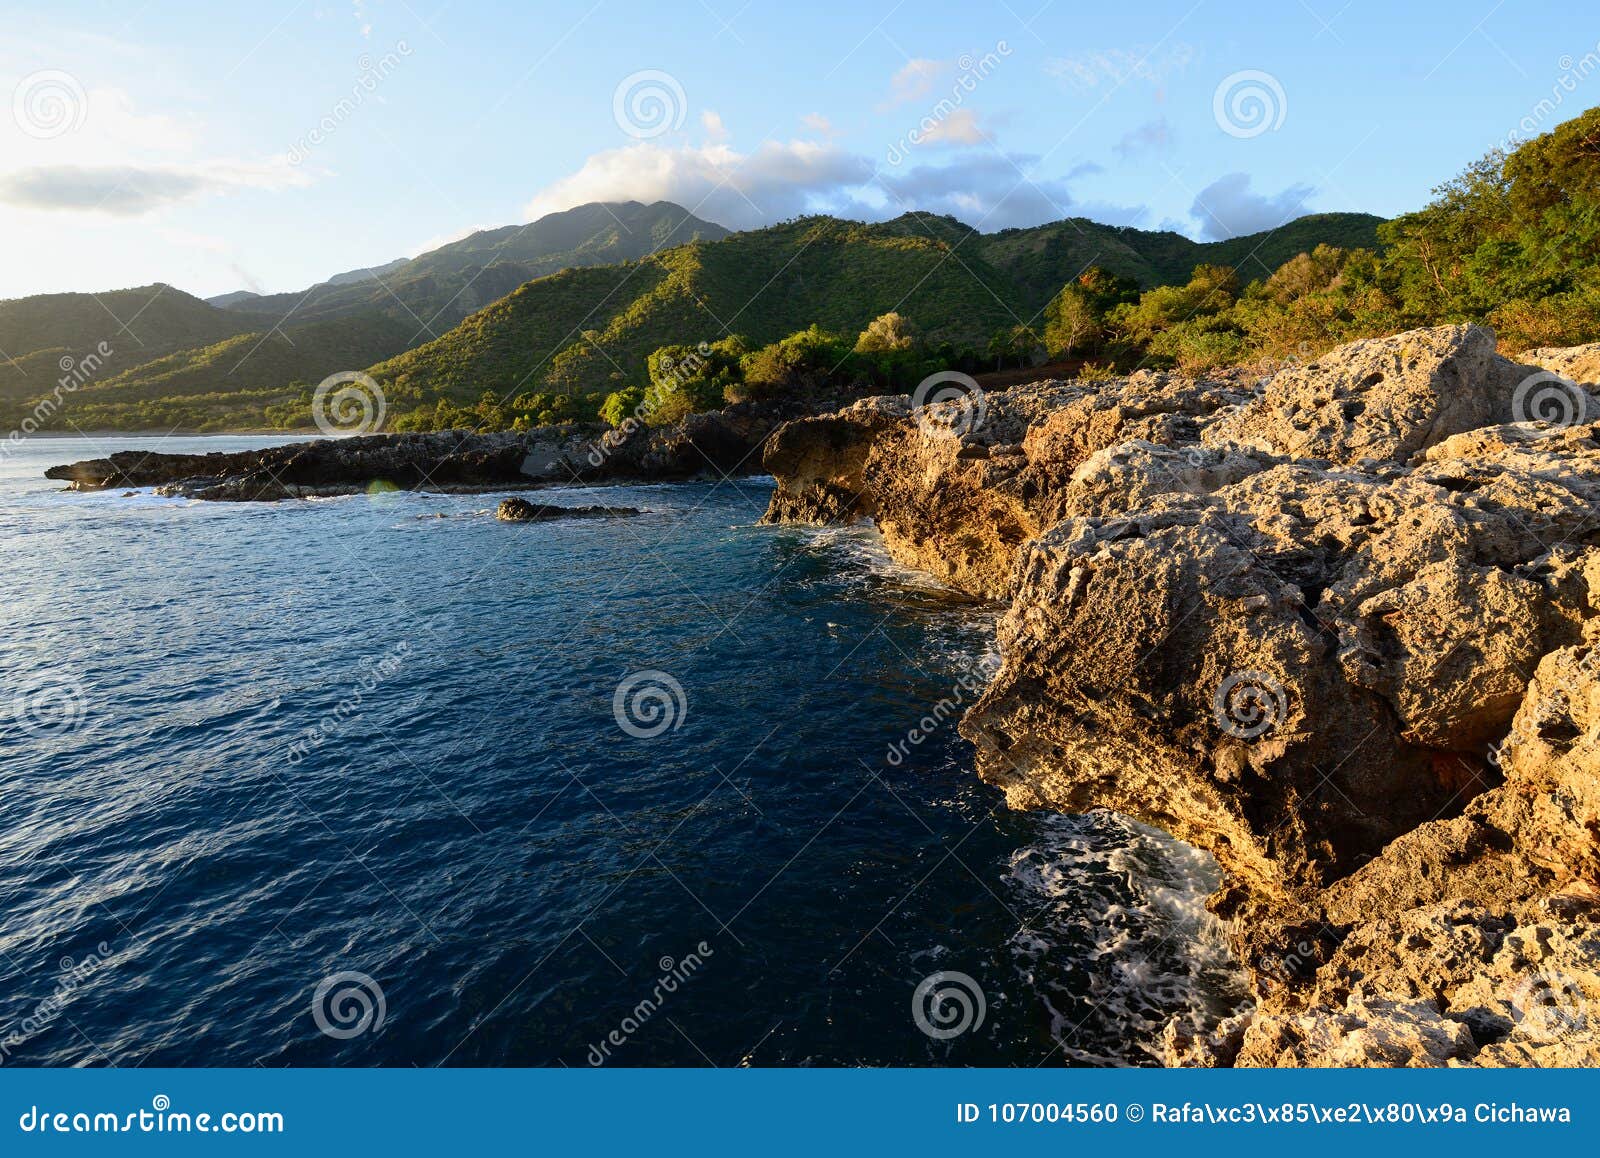 cuba, sierra maestra coast of the caribbean sea